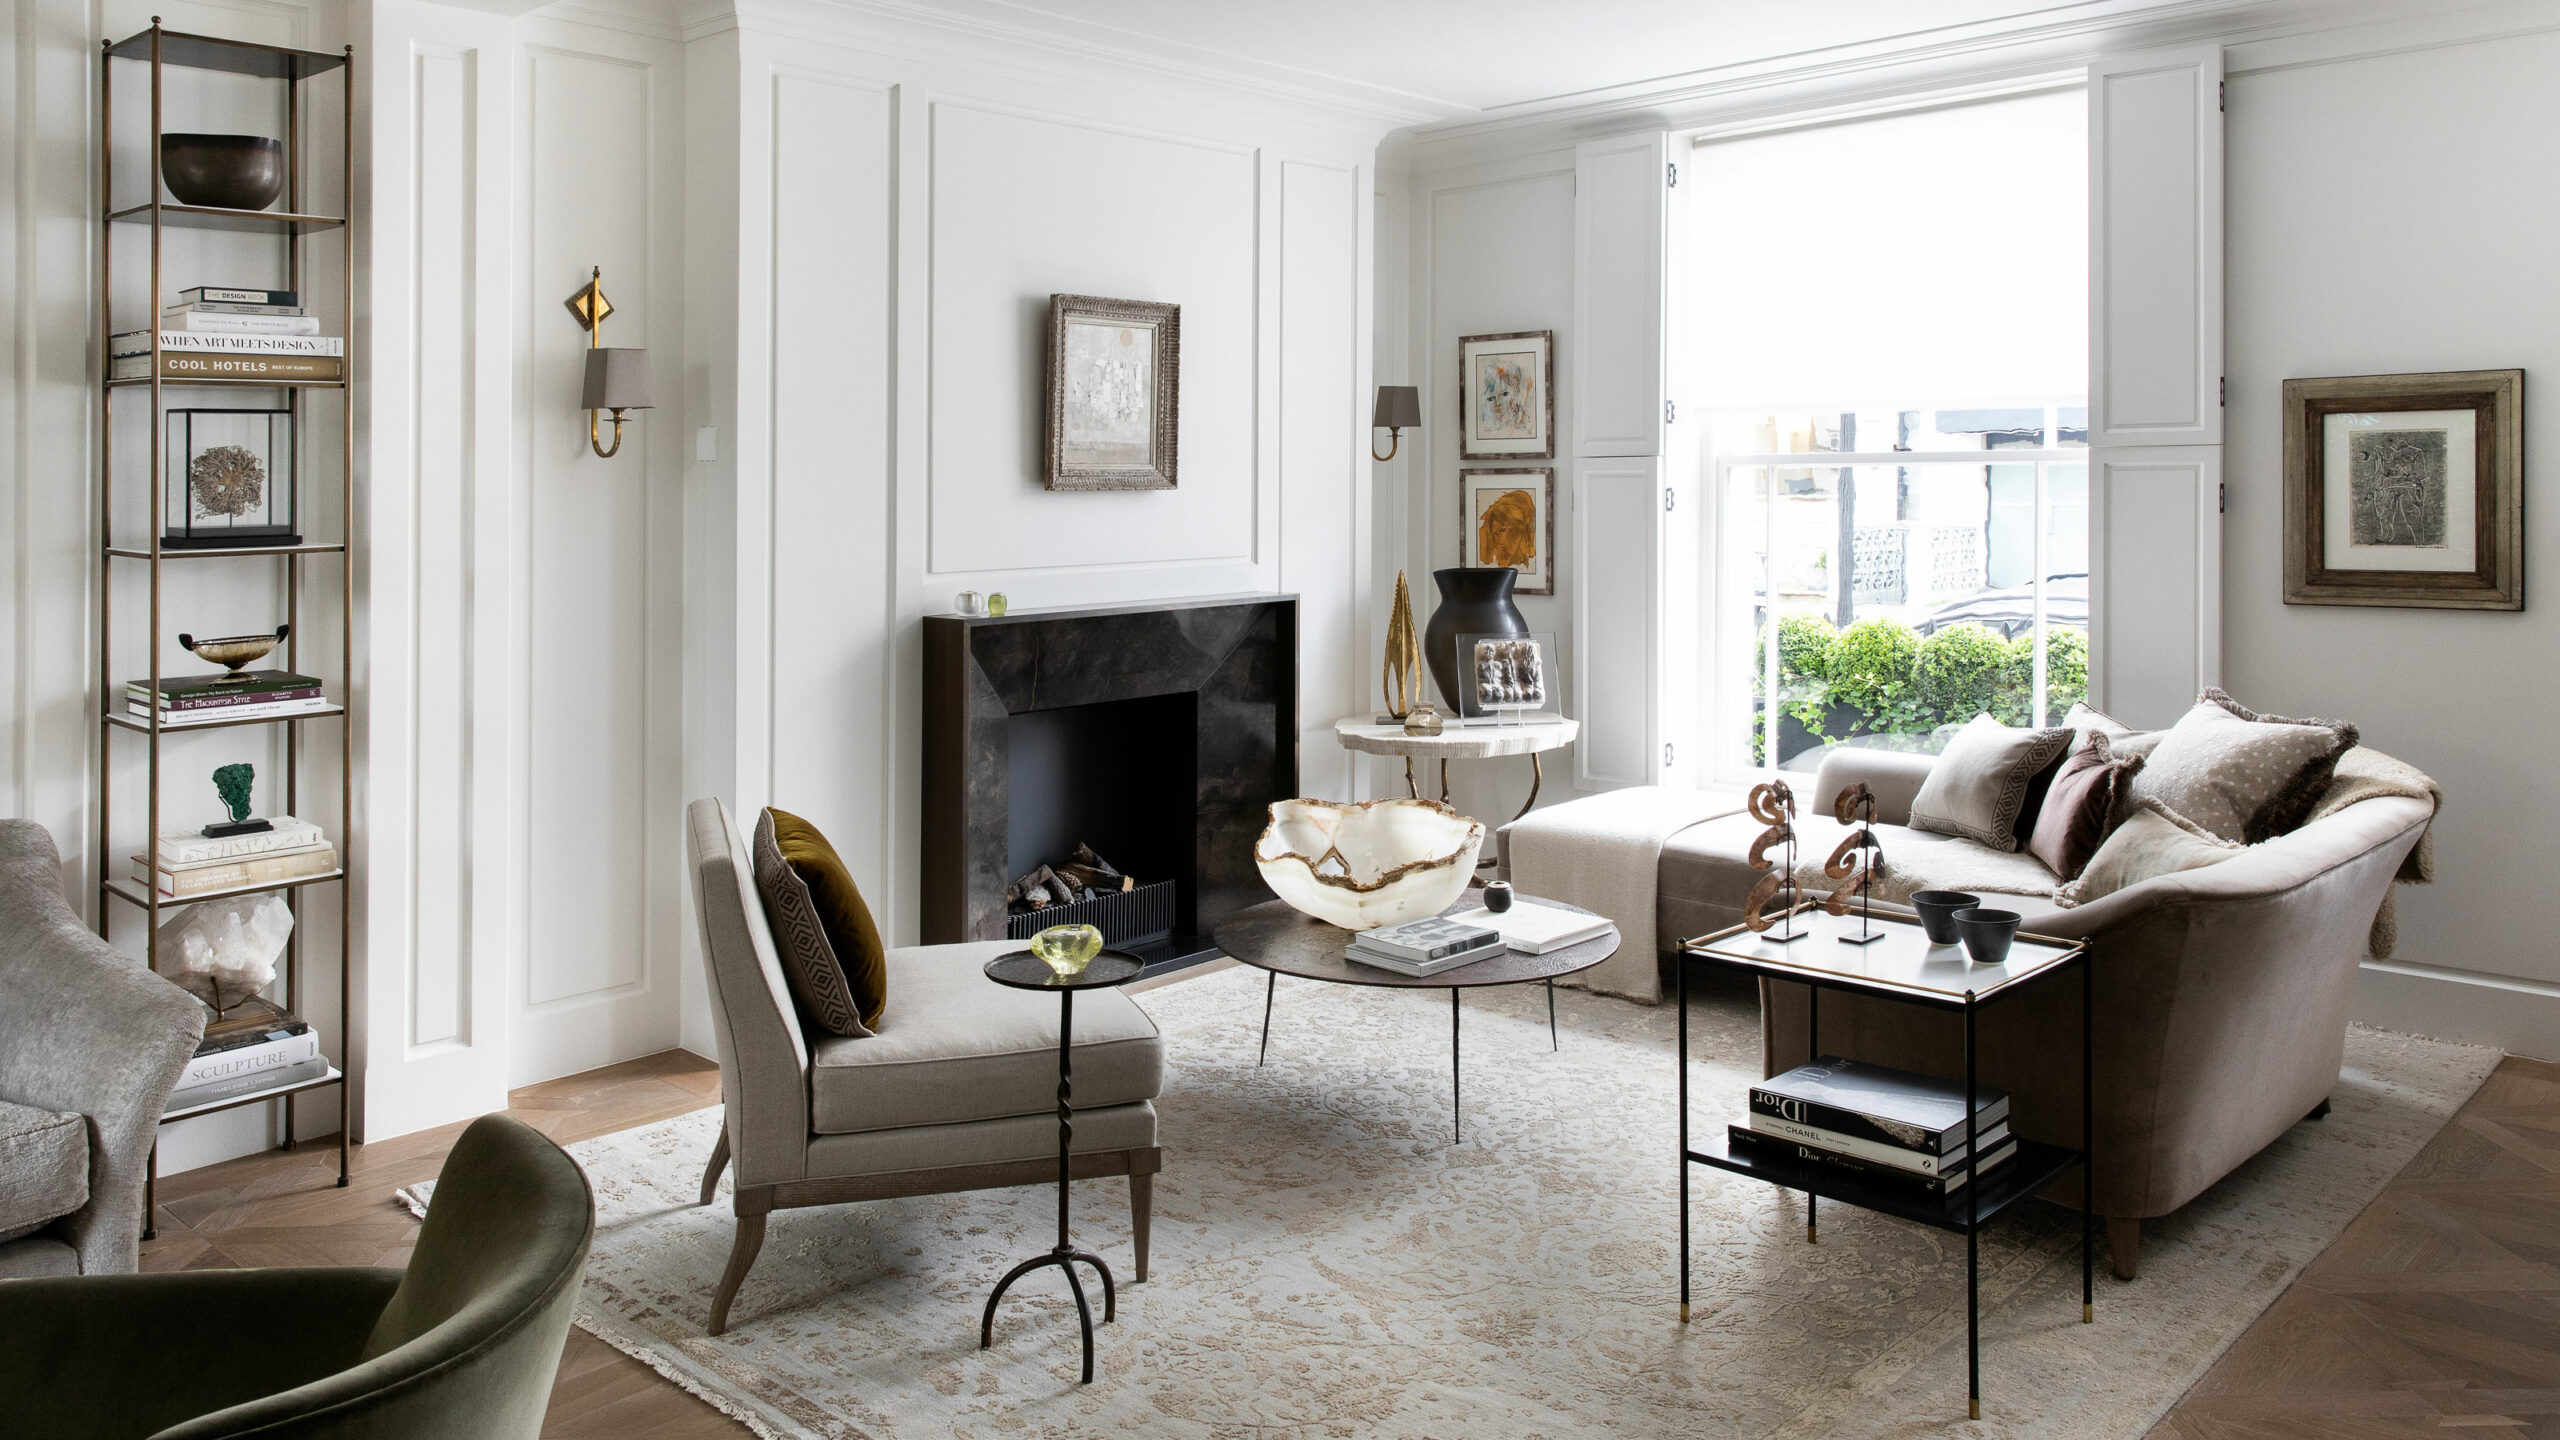 Elegant living room interior design with natural light.